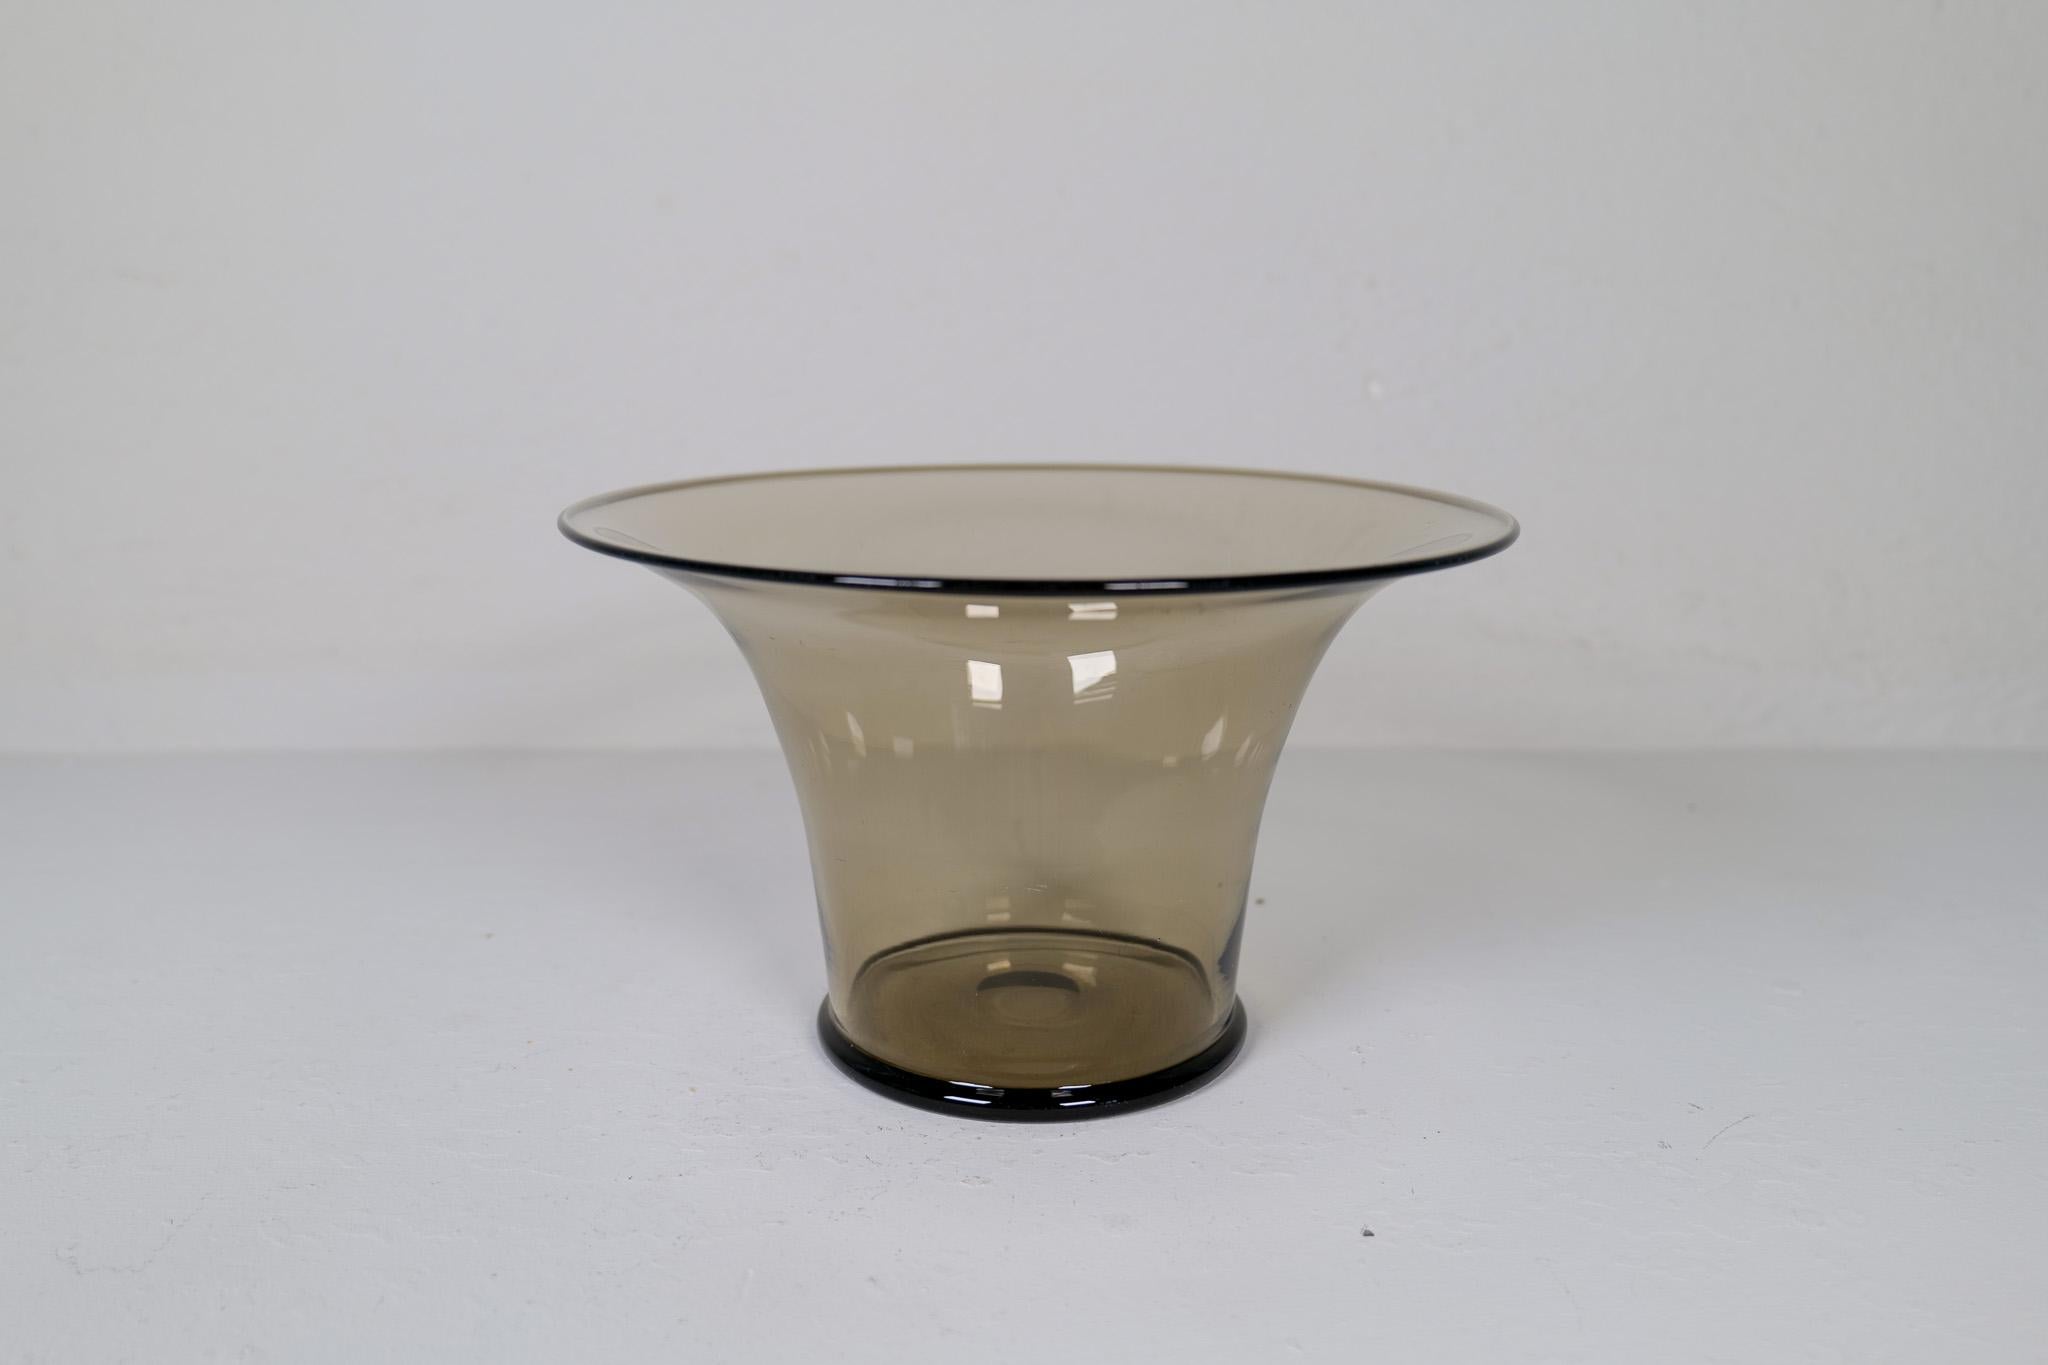  Art Deco Set of 2 Glass Bowls Simon Gate Orrefors, Sweden 1920s For Sale 7